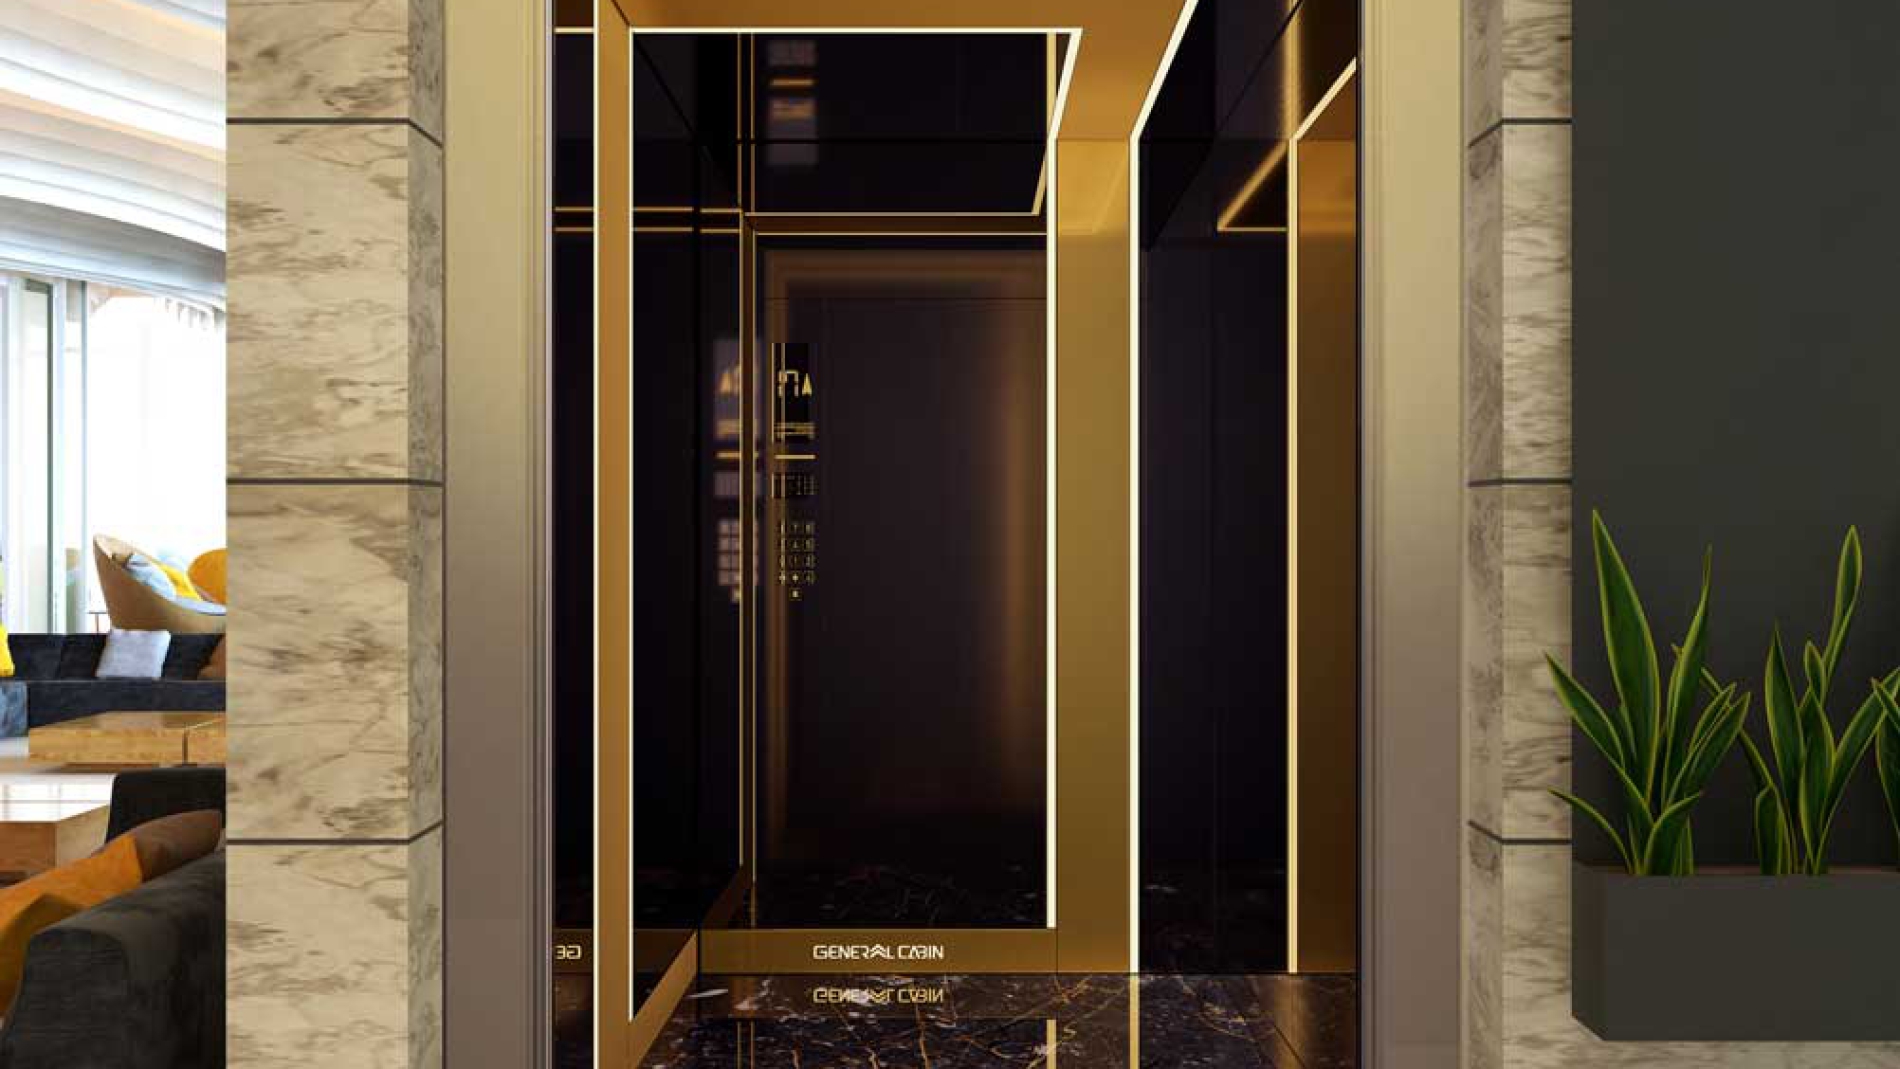 دکور کابین آسانسور مدل G31